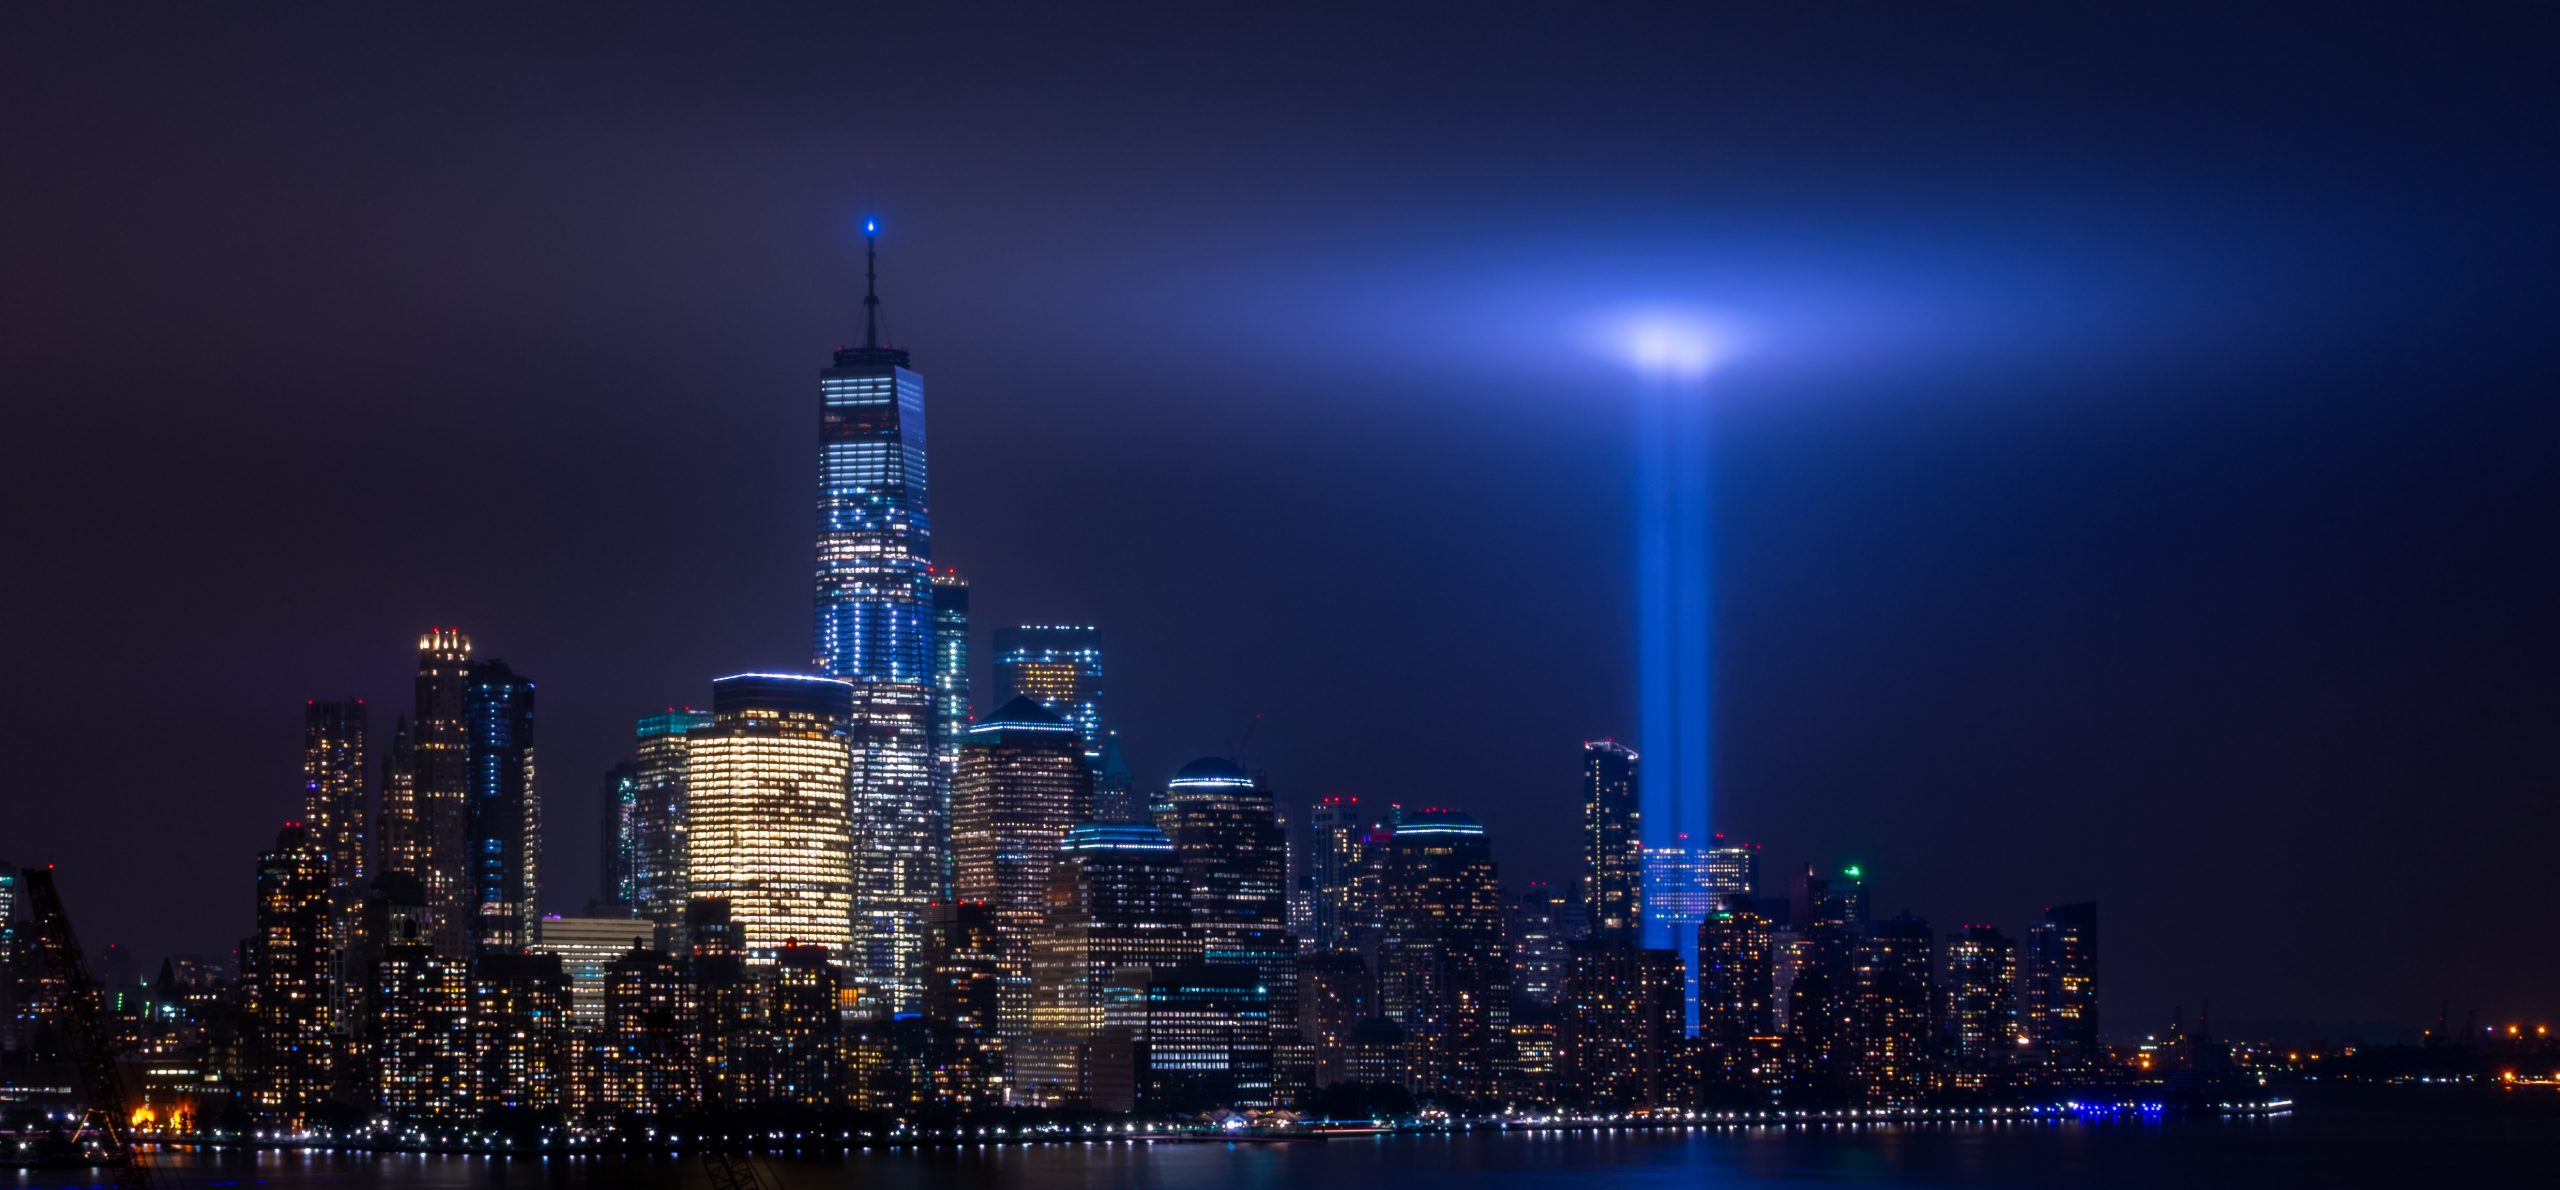 9/11 Twenty Years On